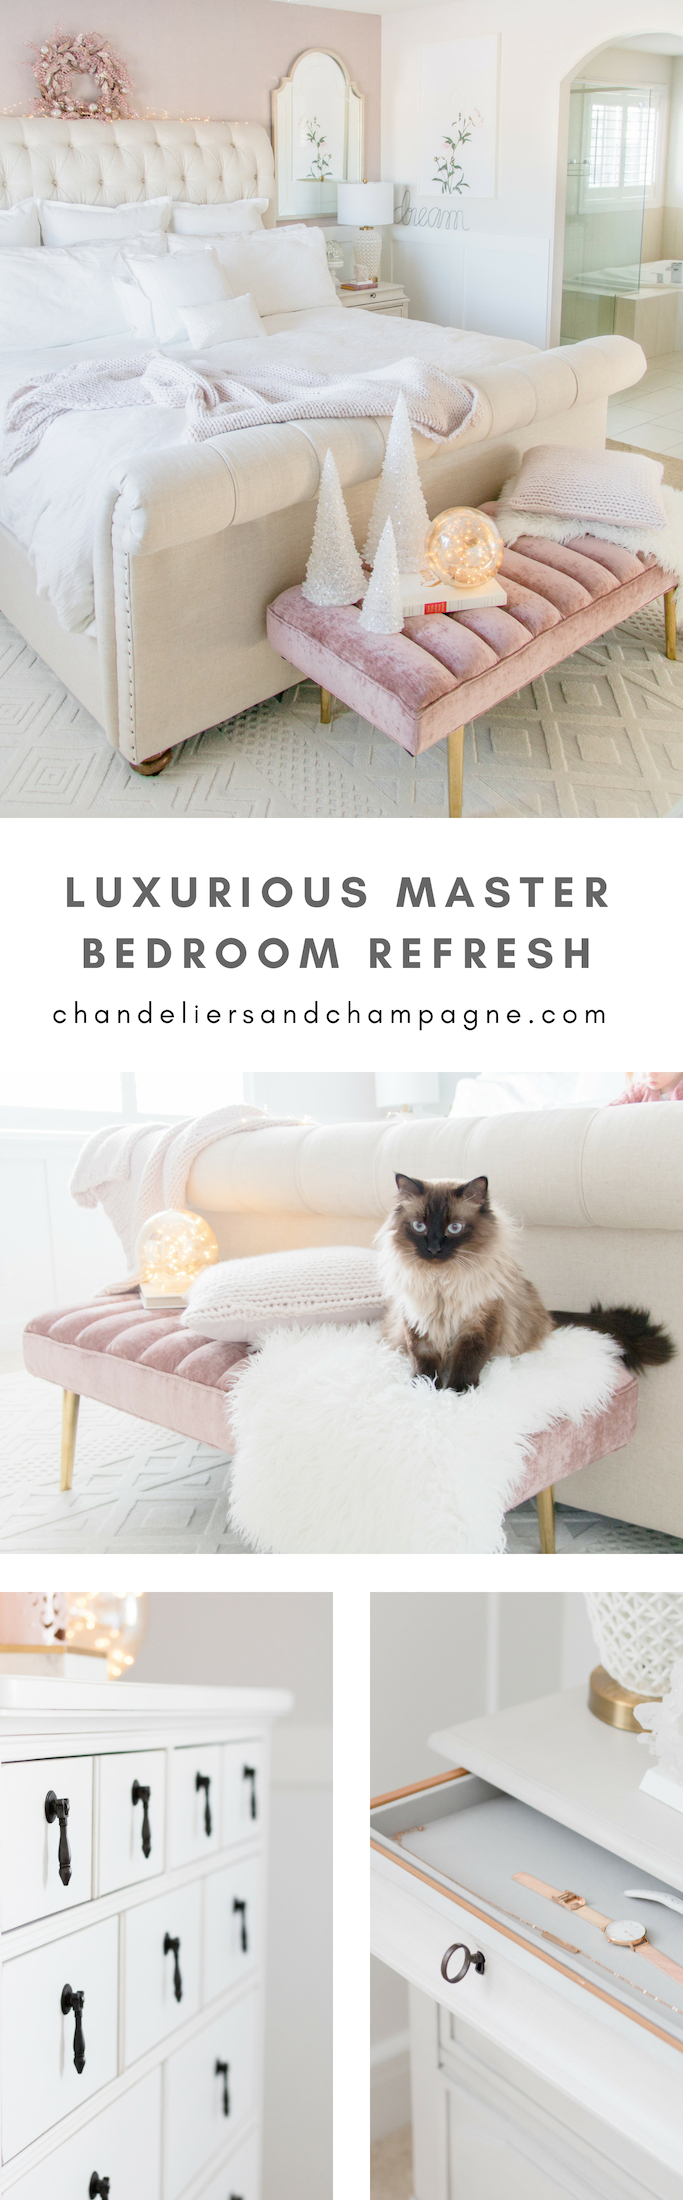 Luxurious master bedroom refresh: pink and white feminine, glamorous master bedroom with pink and velvet details